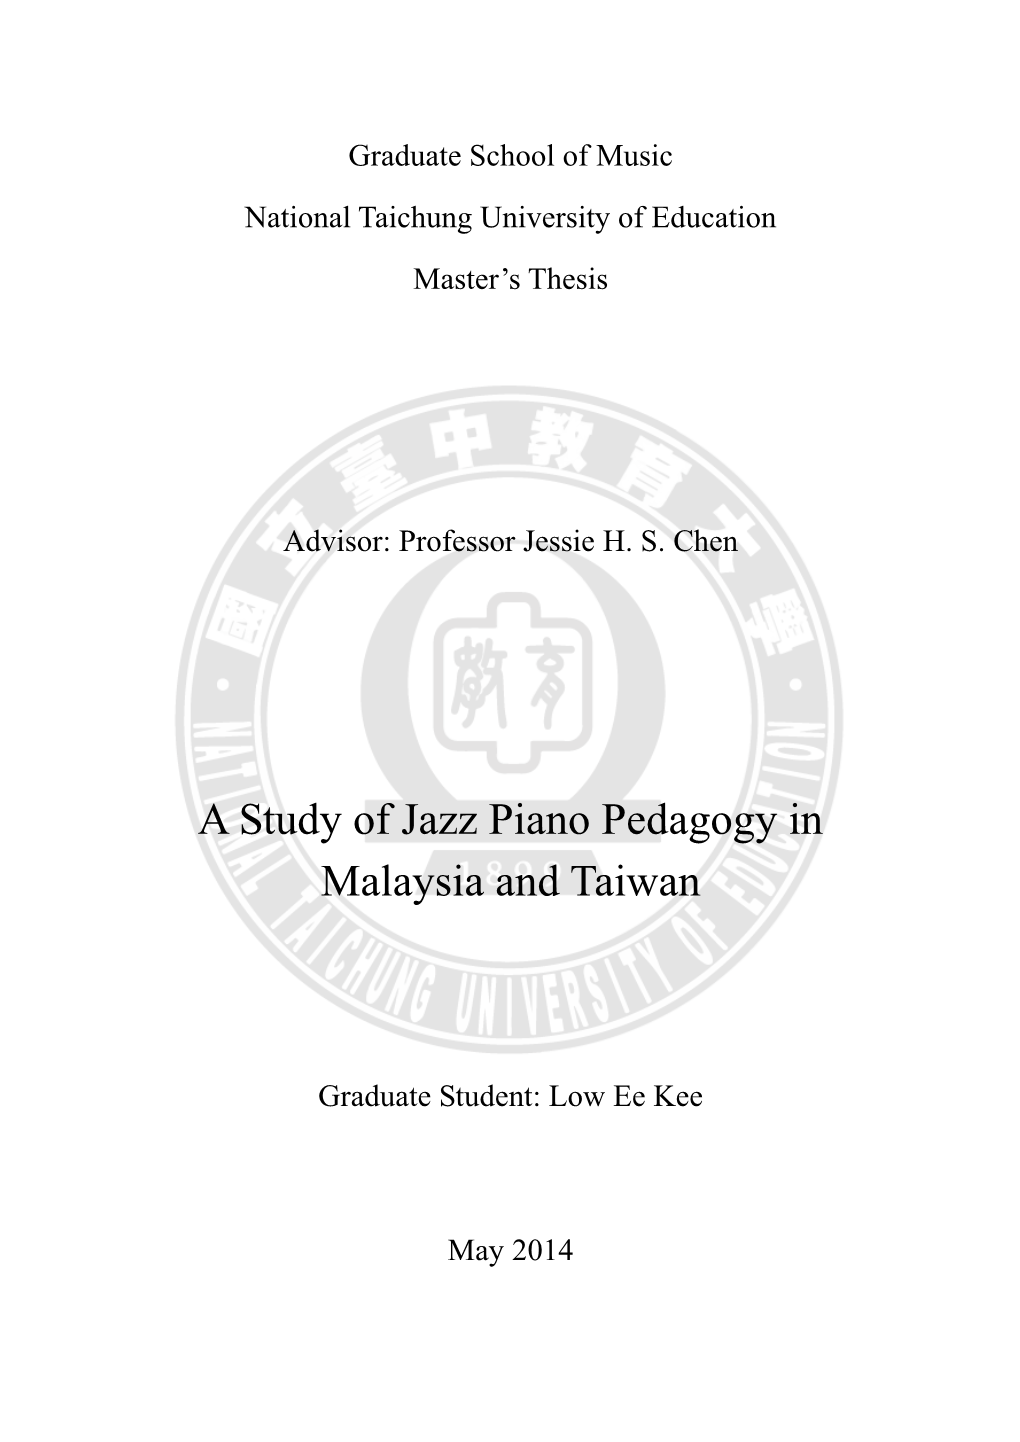 A Study of Jazz Piano Pedagogy in Malaysia and Taiwan